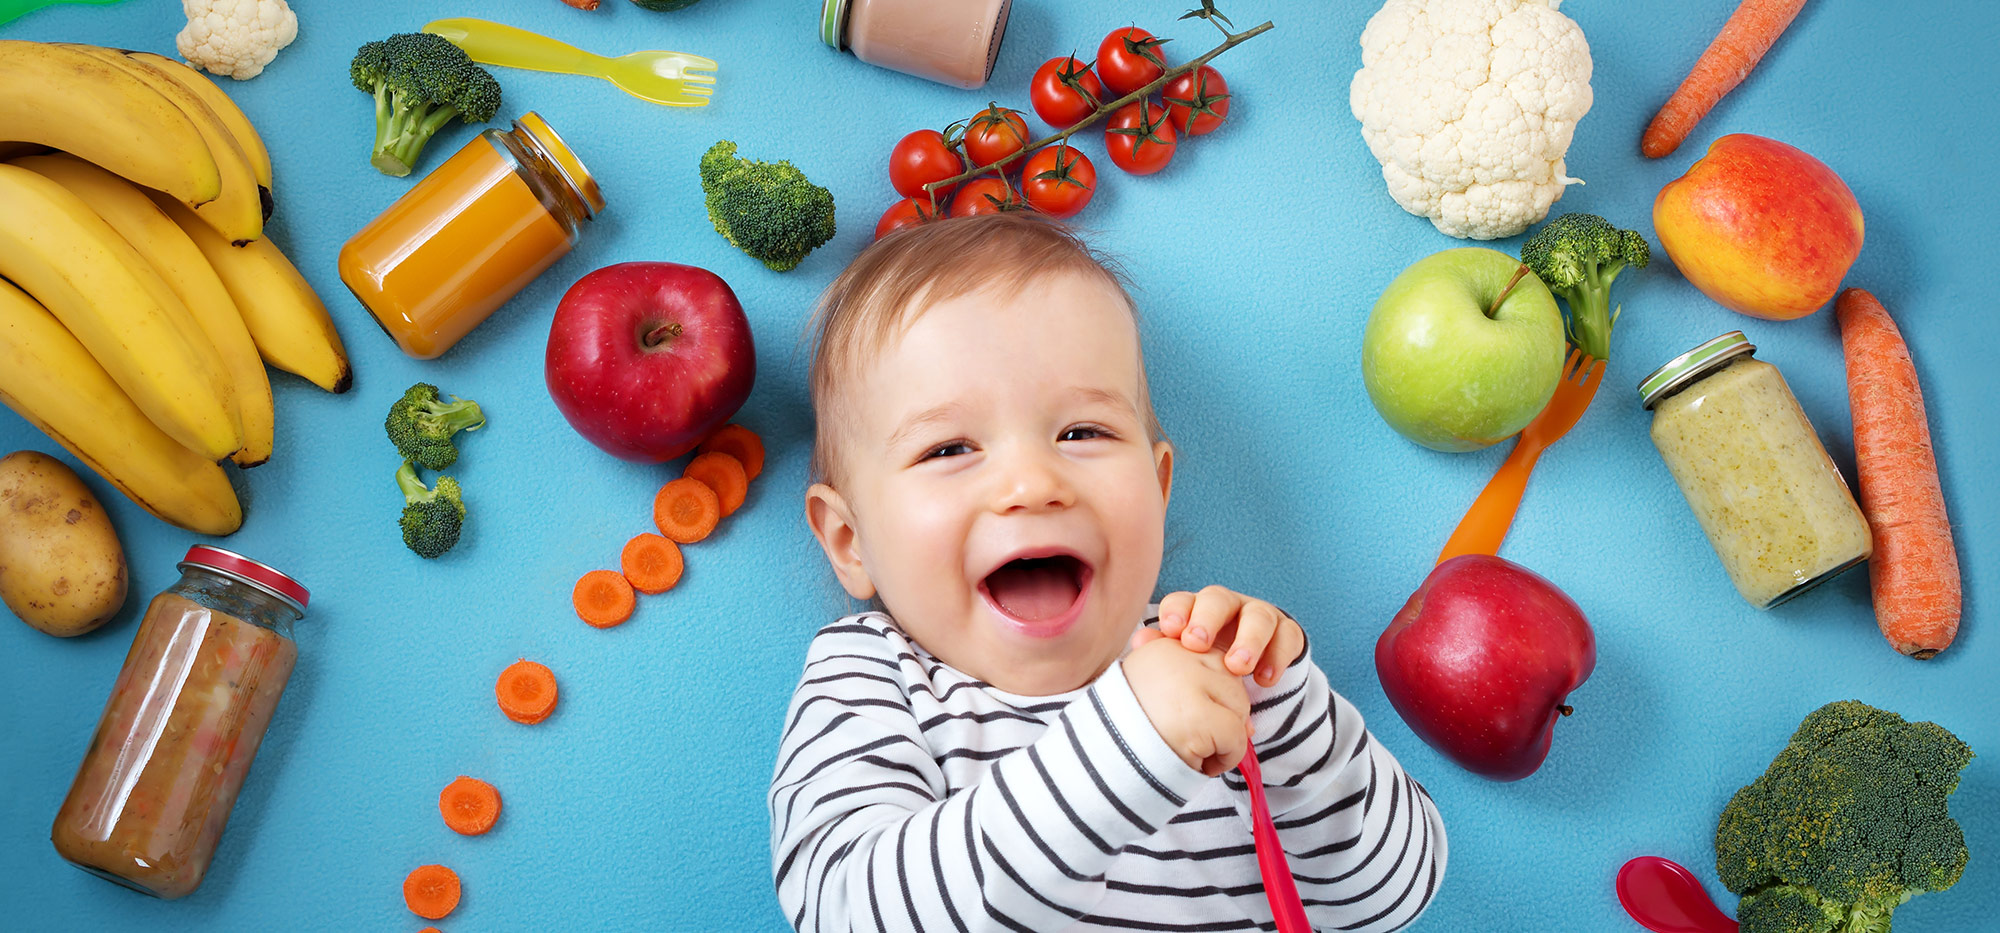 Nutrition for infants 9-12 months